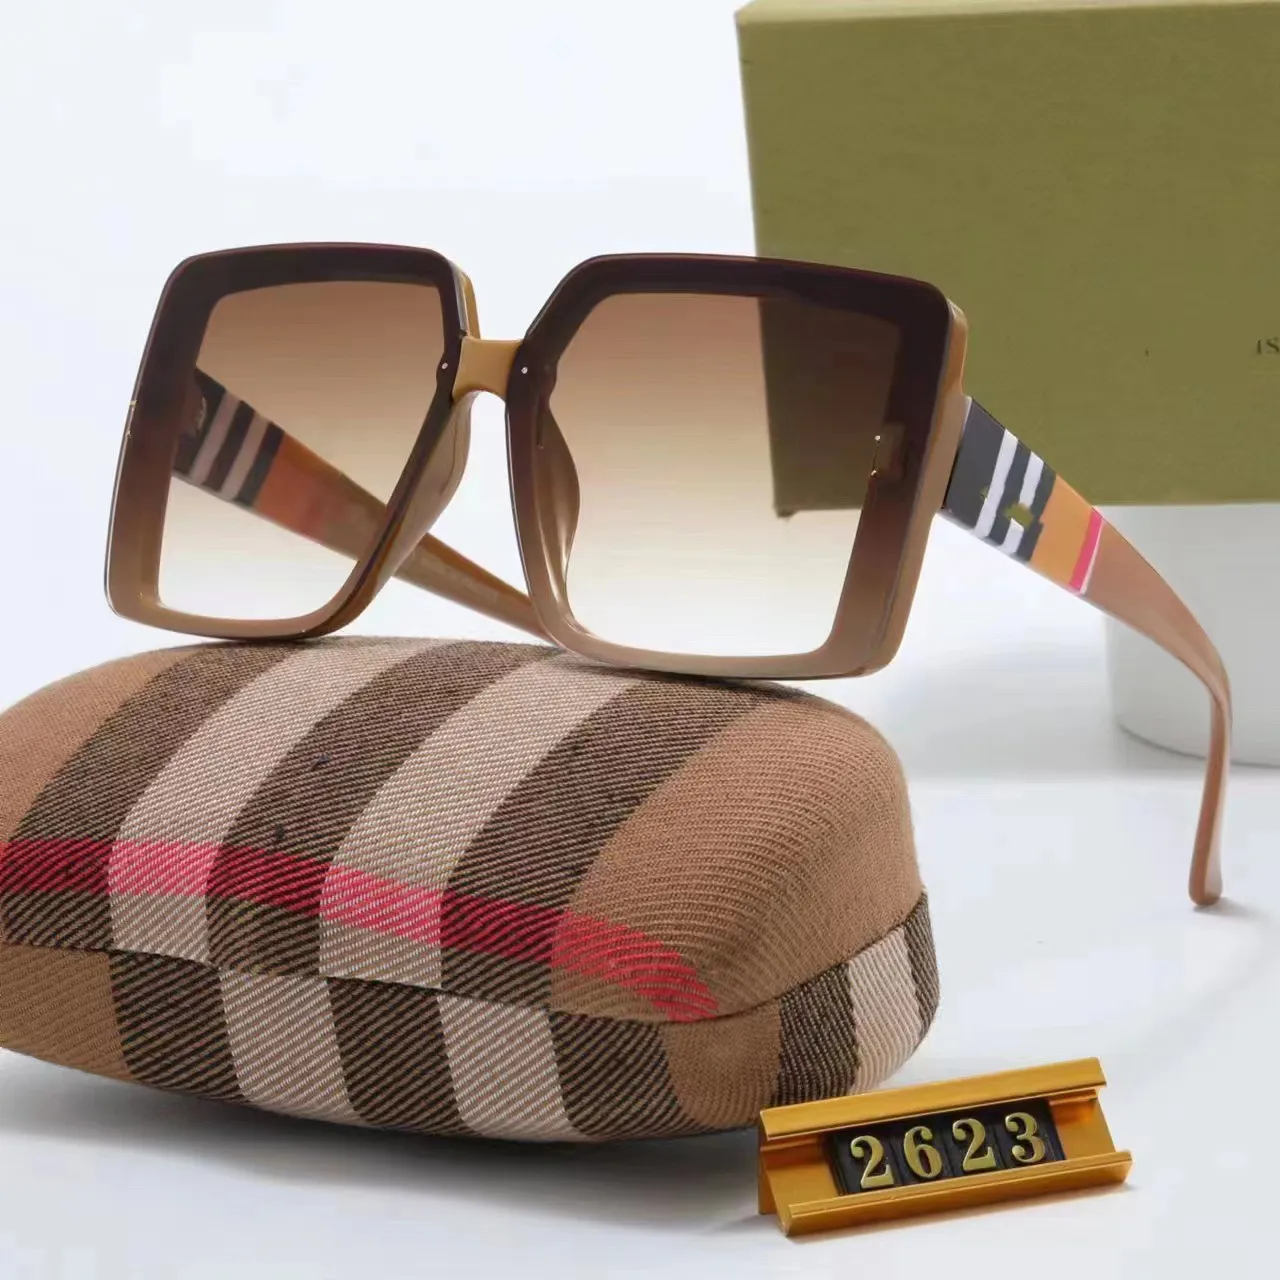 Polarized Mens Sunglasses: Designer Eyewear For Outdoor Activities From  Designerdream, $31.03